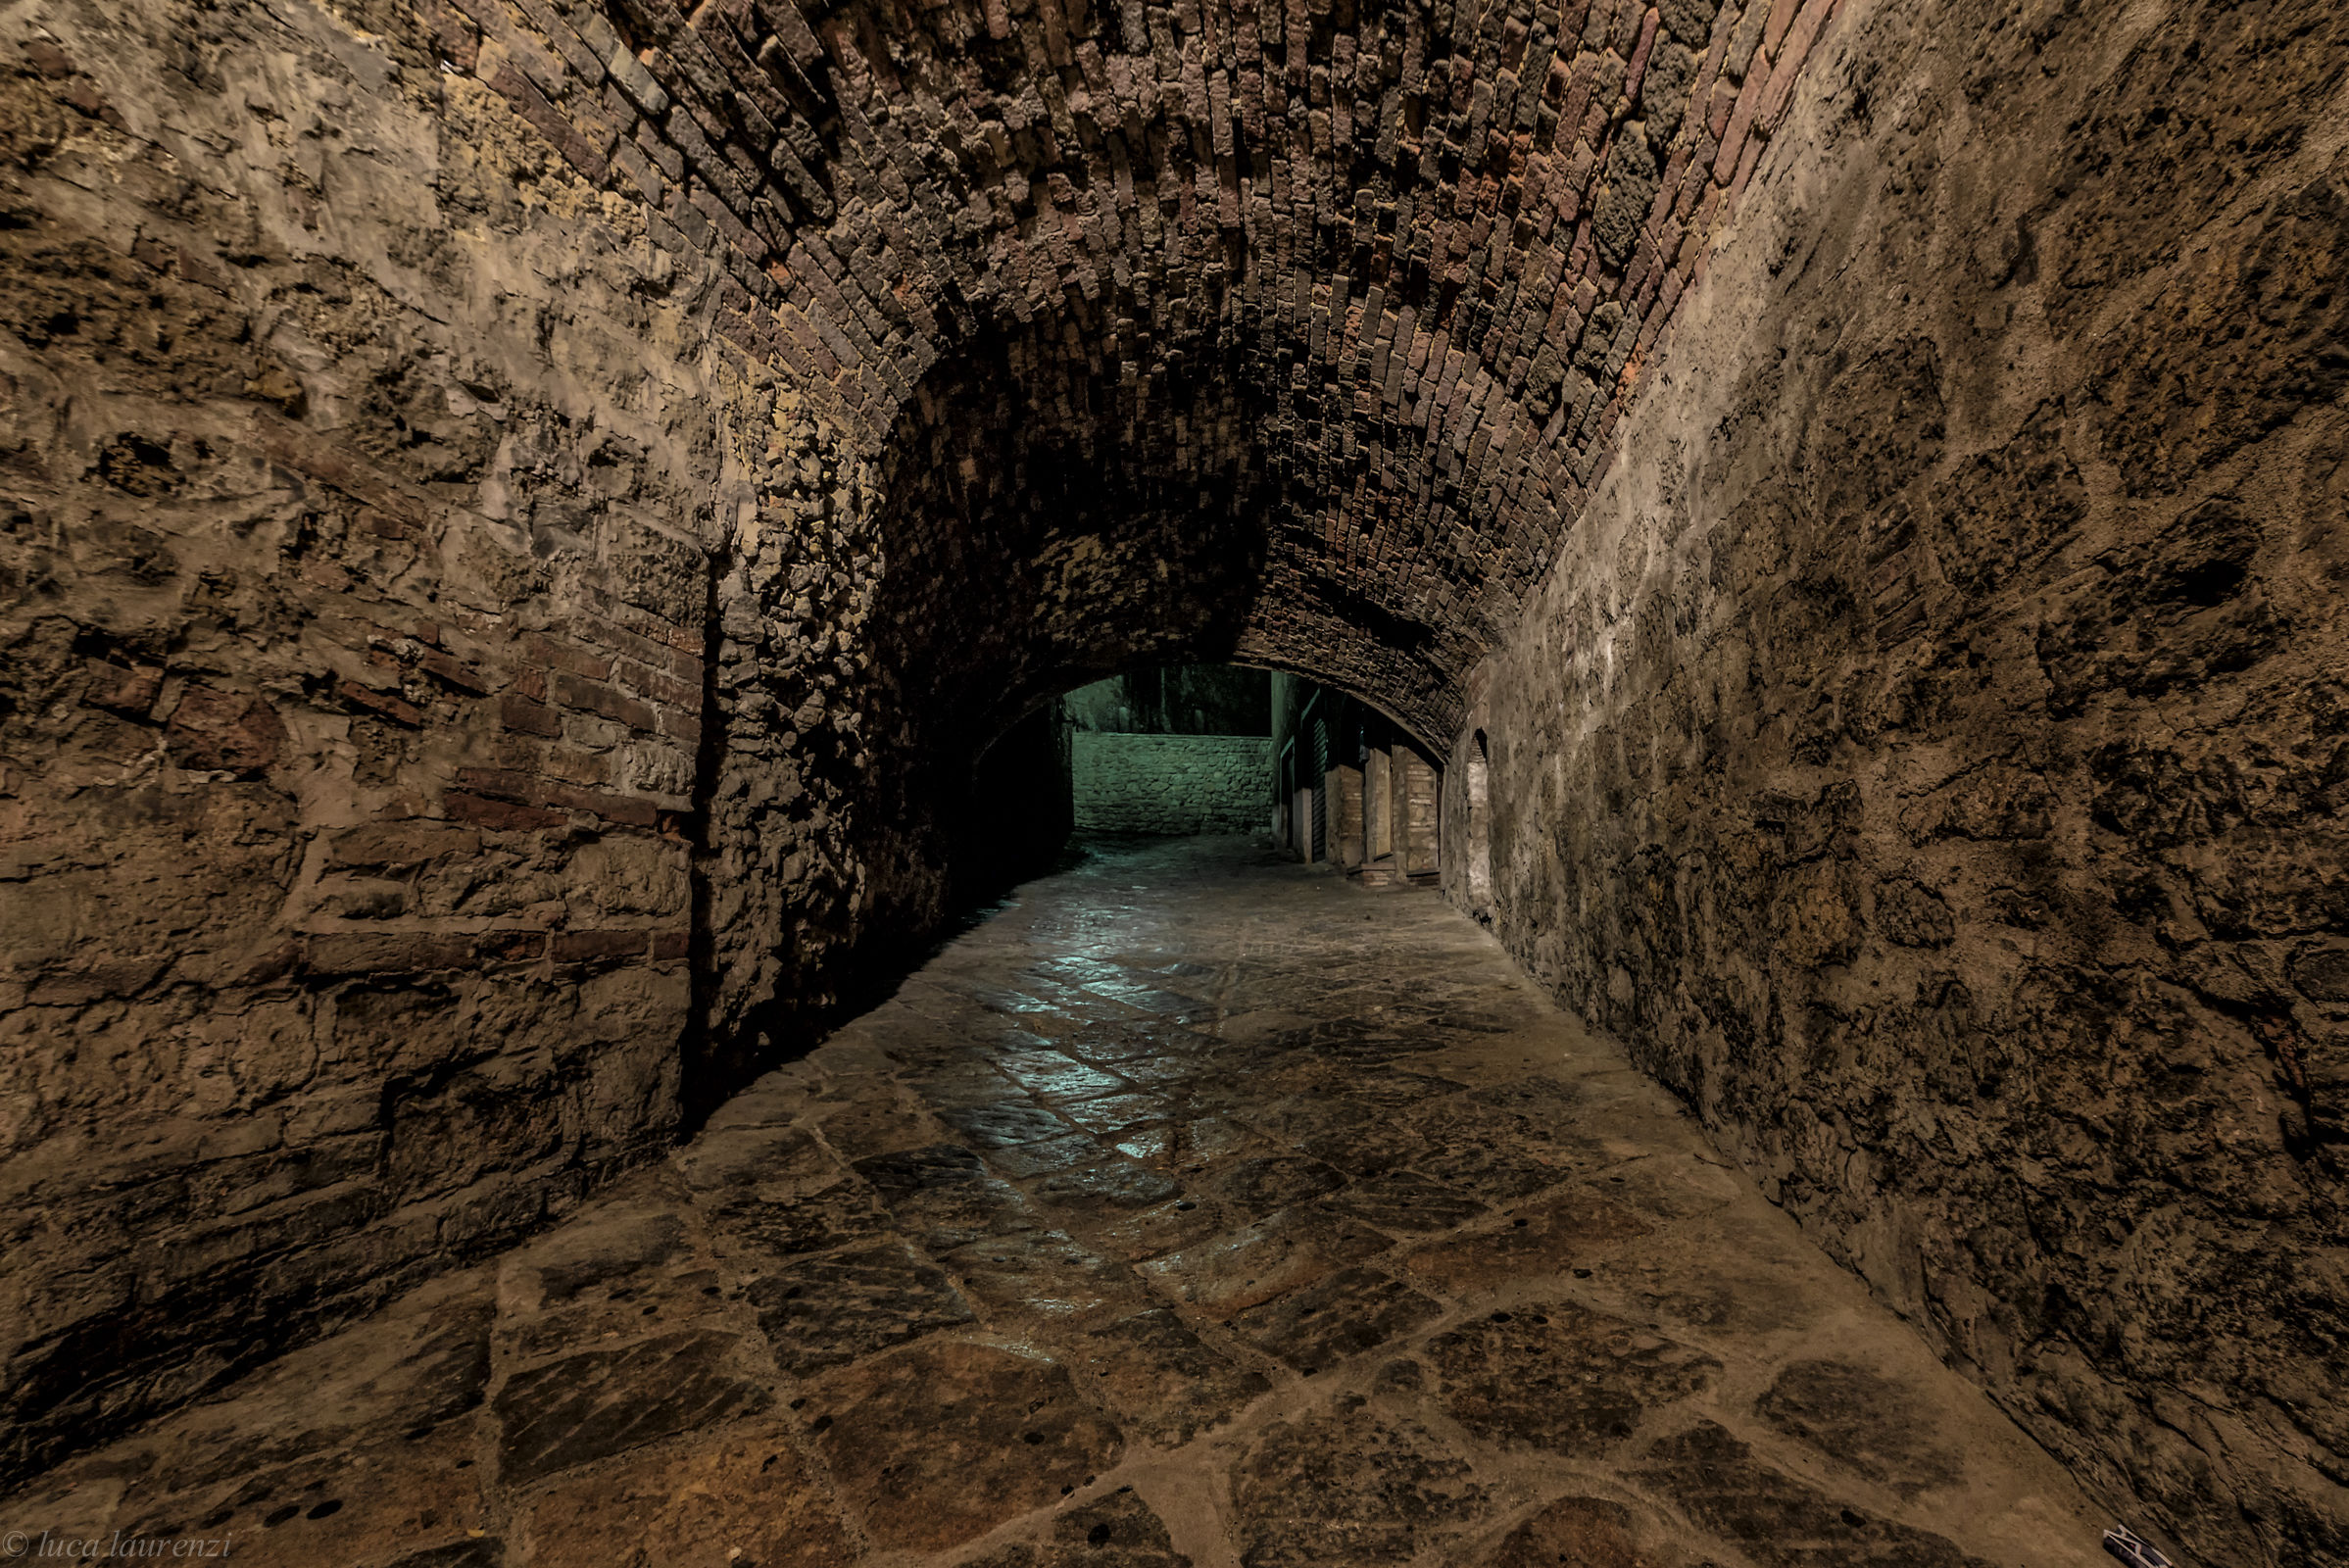 The Volterra tunnel...